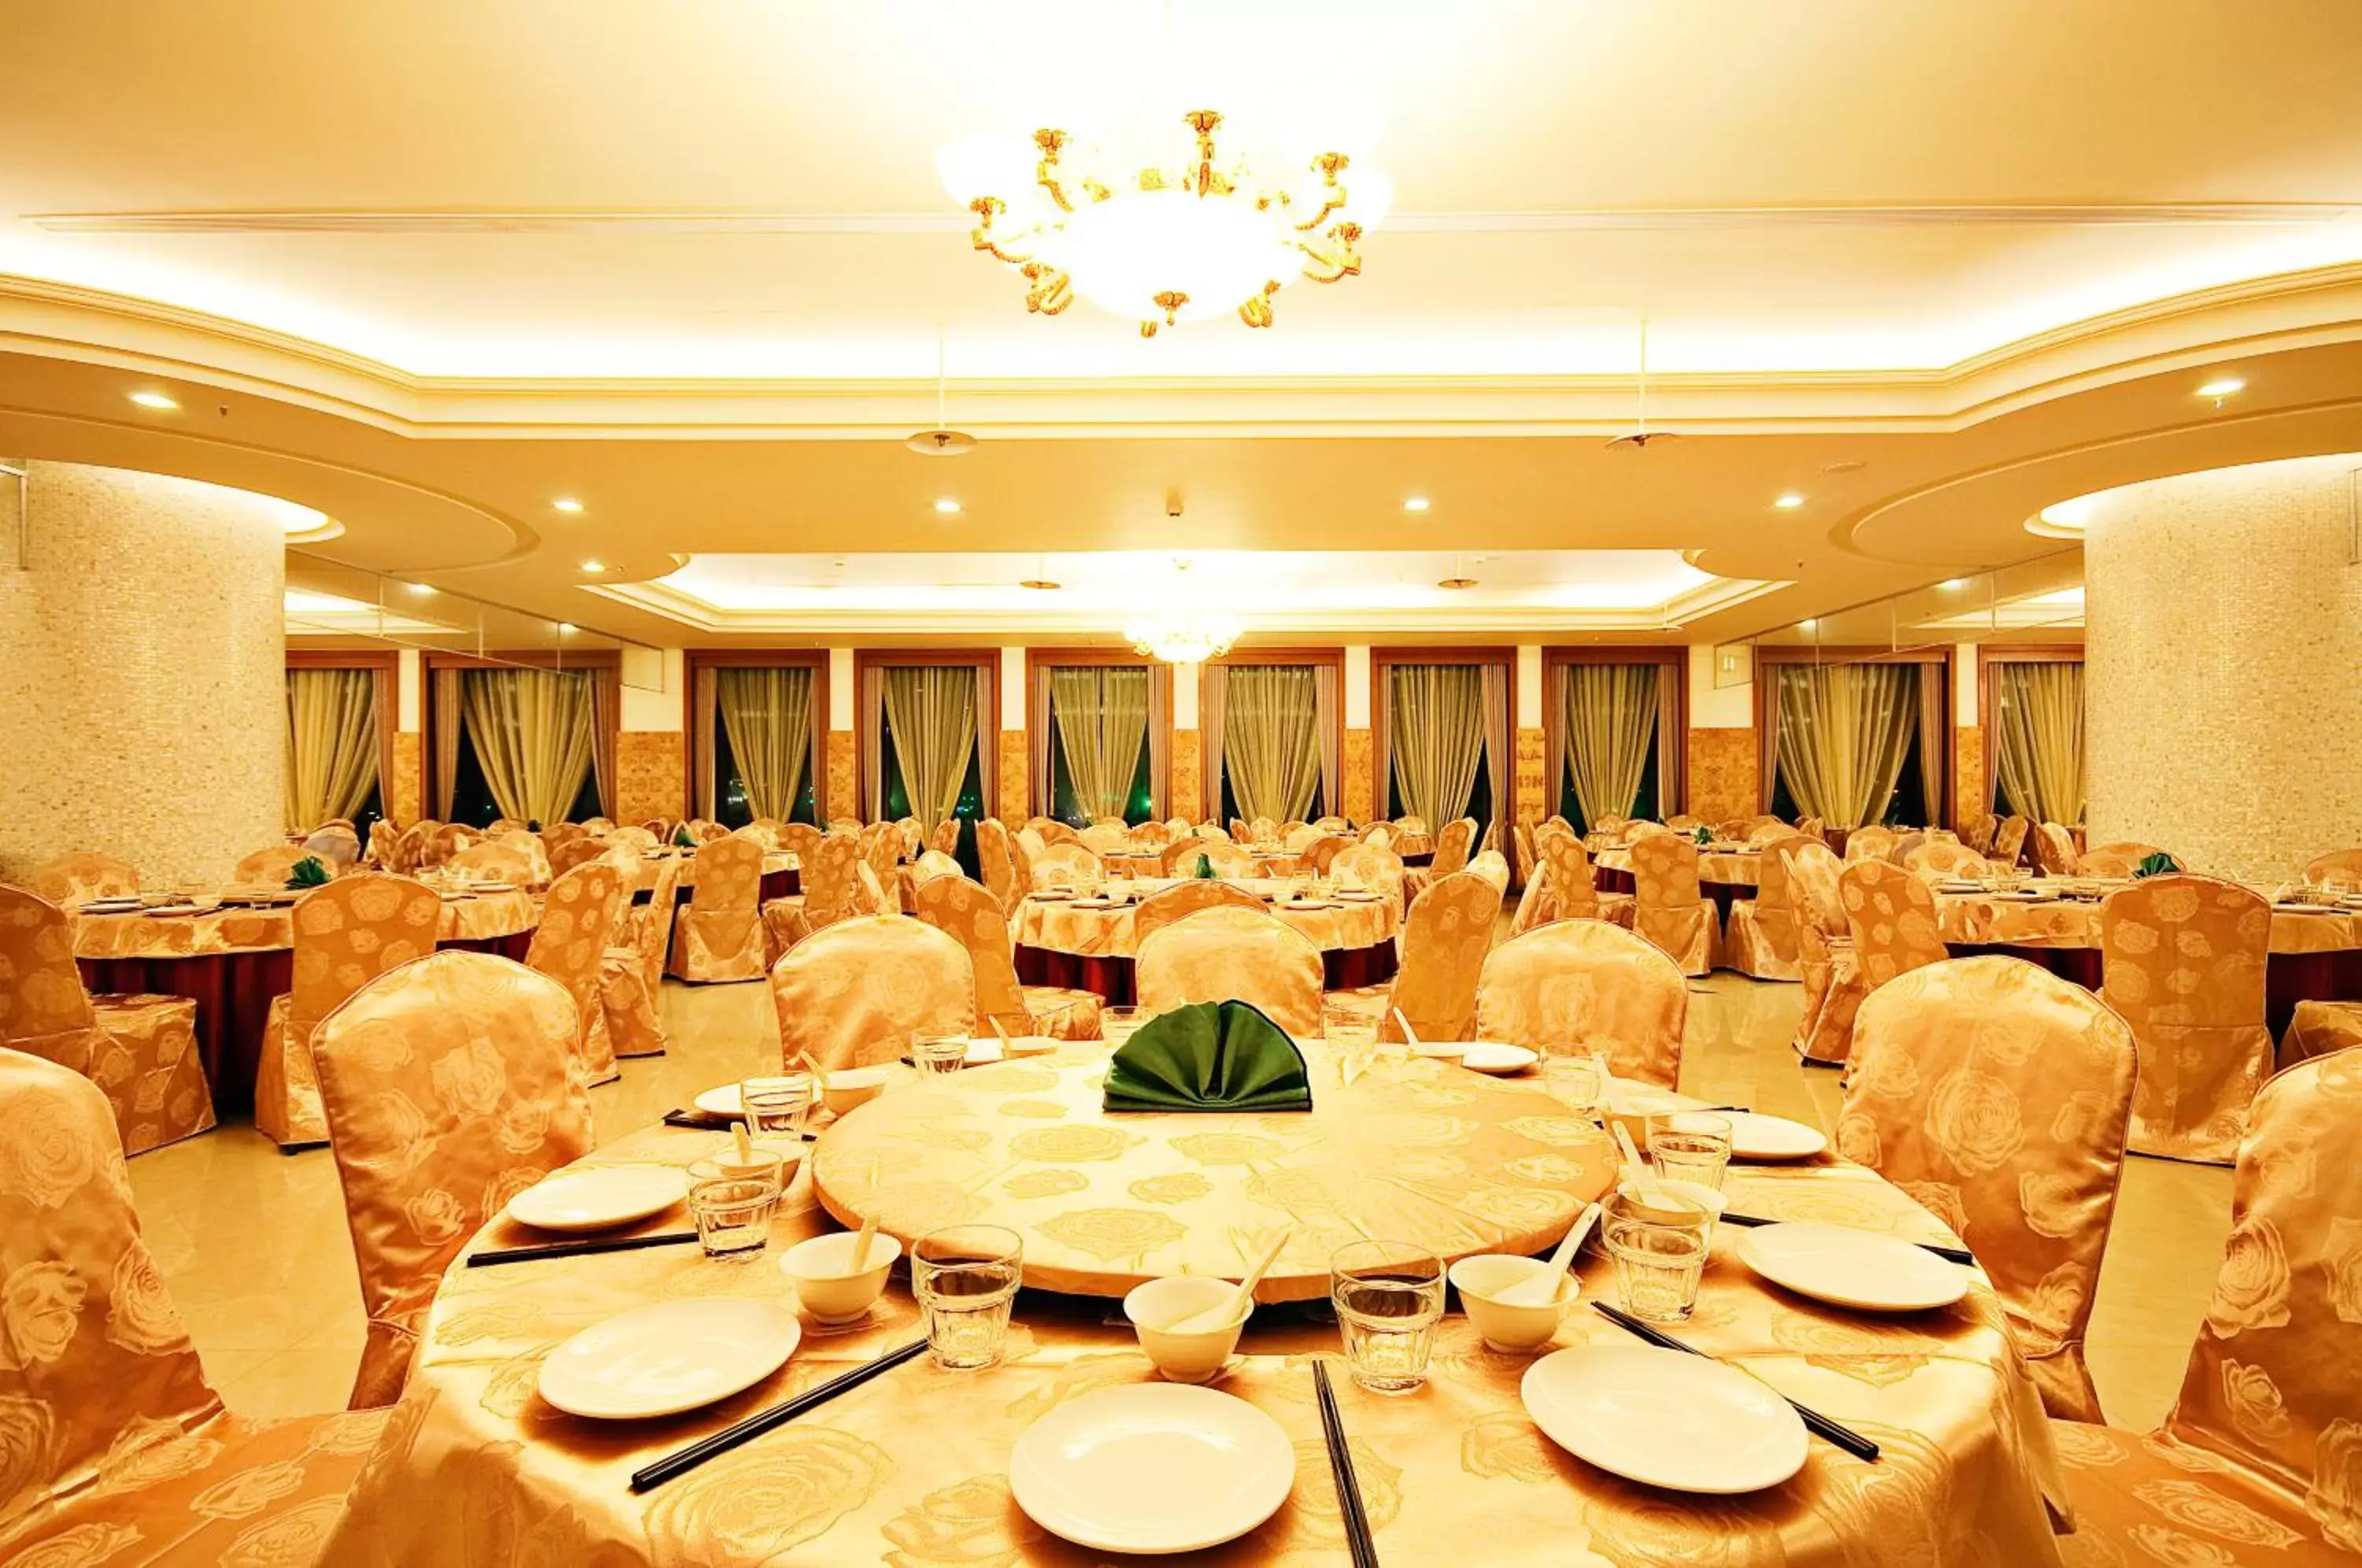 Banquet/Function facilities, Banquet Facilities in Yaling Hotel